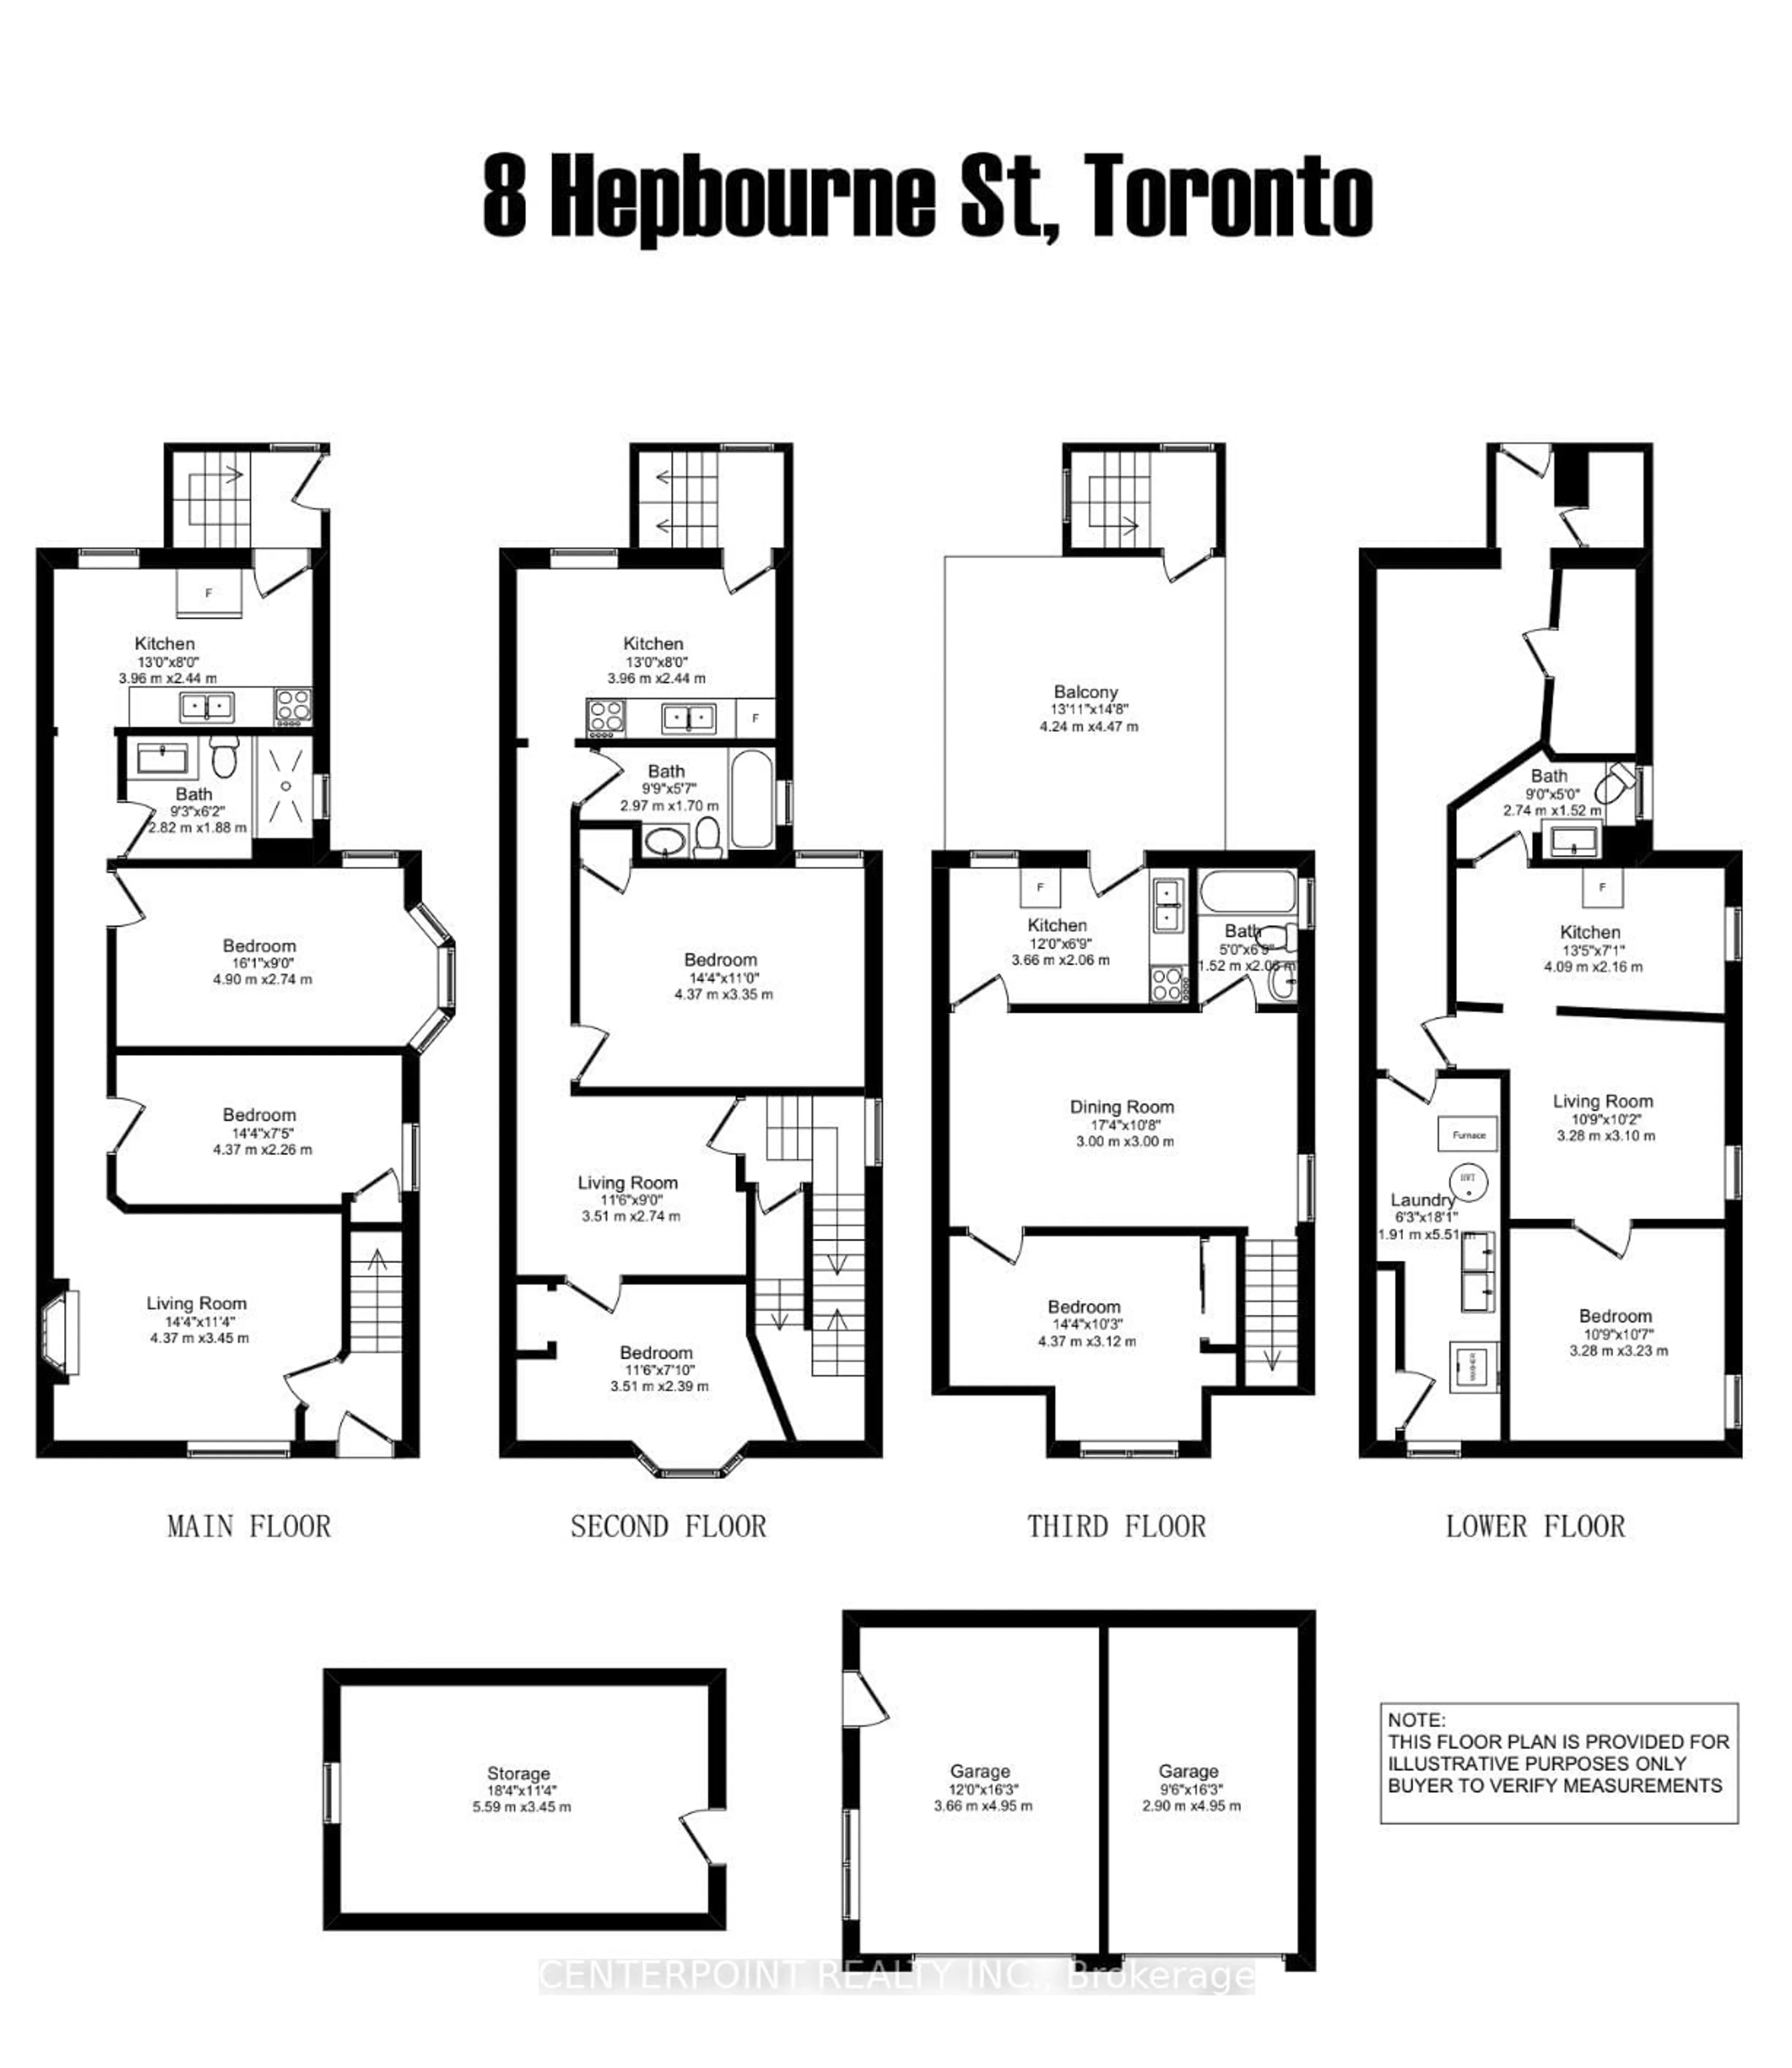 Floor plan for 8 Hepbourne St, Toronto Ontario M6H 1J8